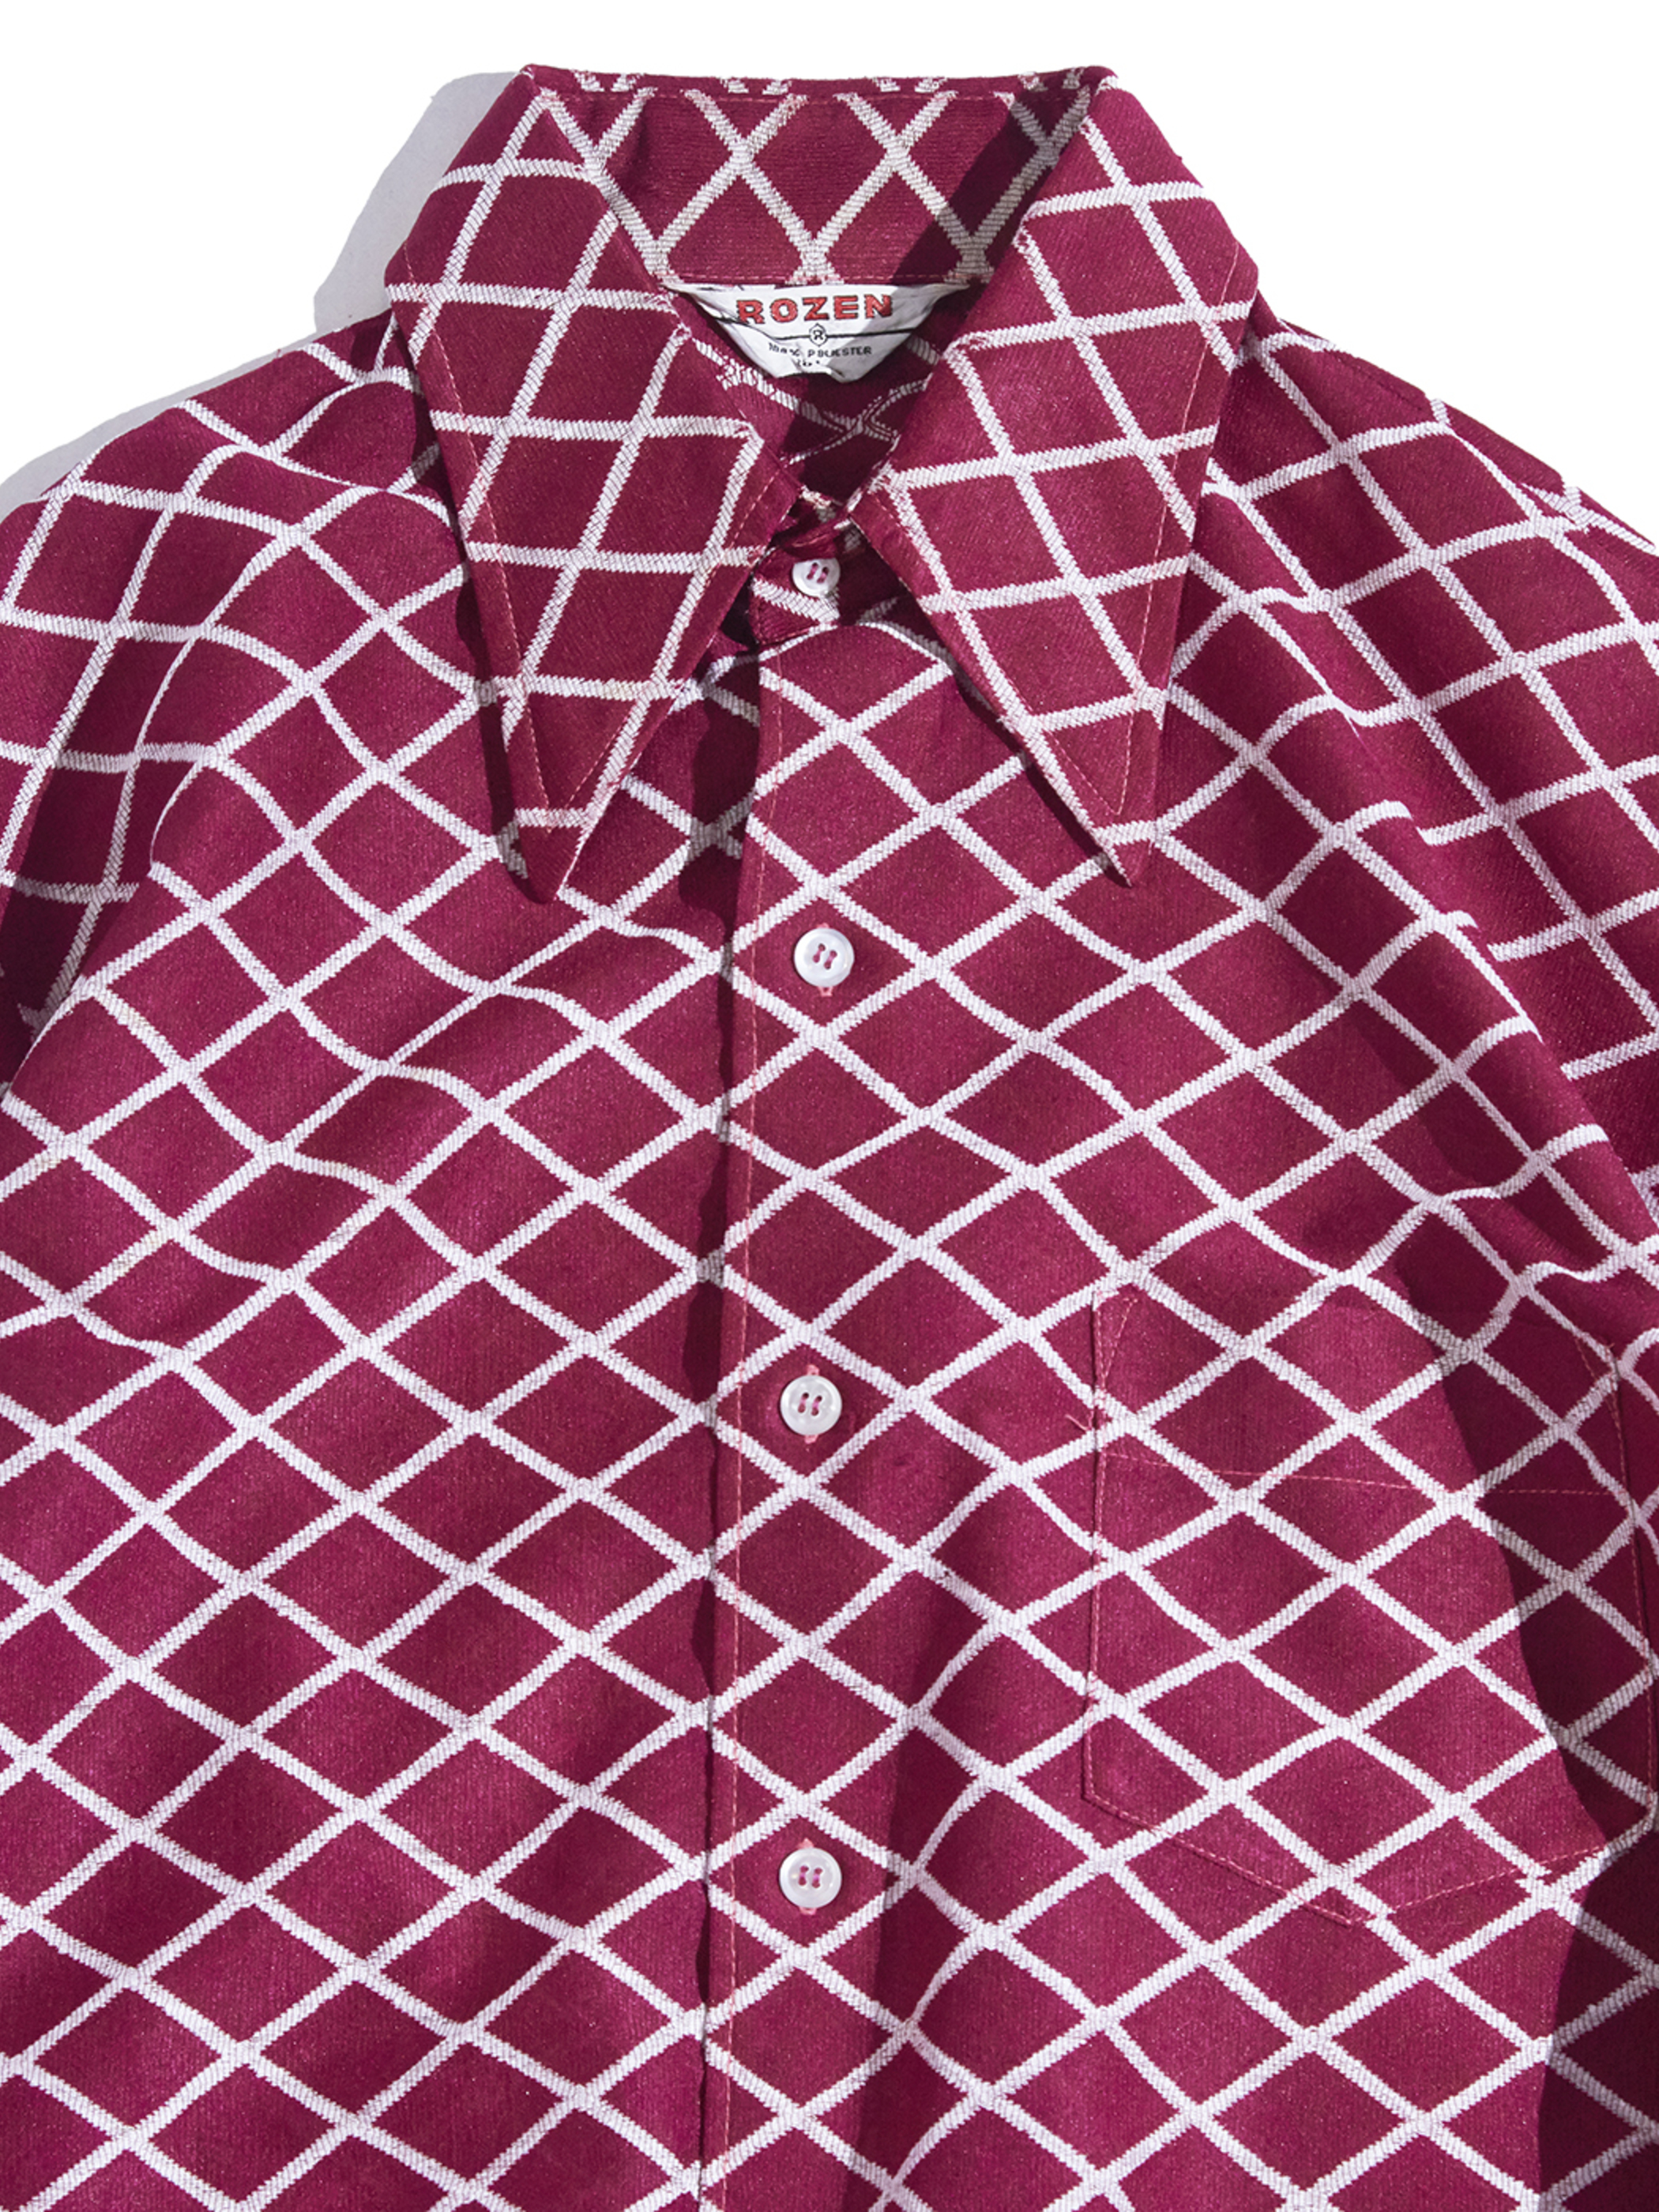 1970s "ROZEN" poly pattern shirt -BURGANDY-